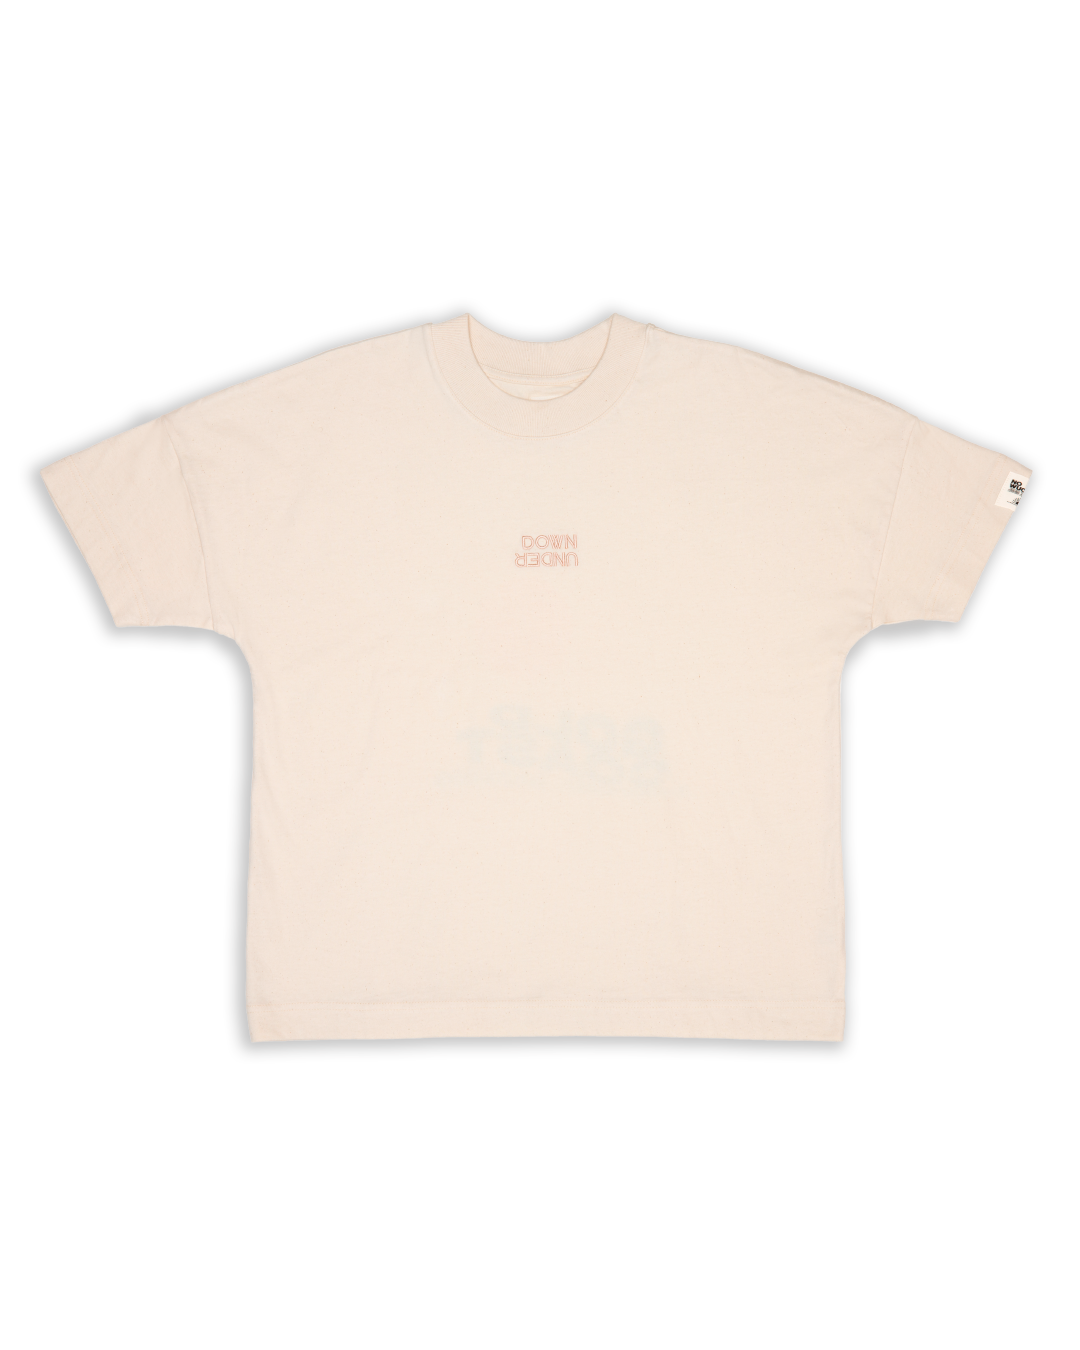 GOLD COAST - Short sleeve T-shirt